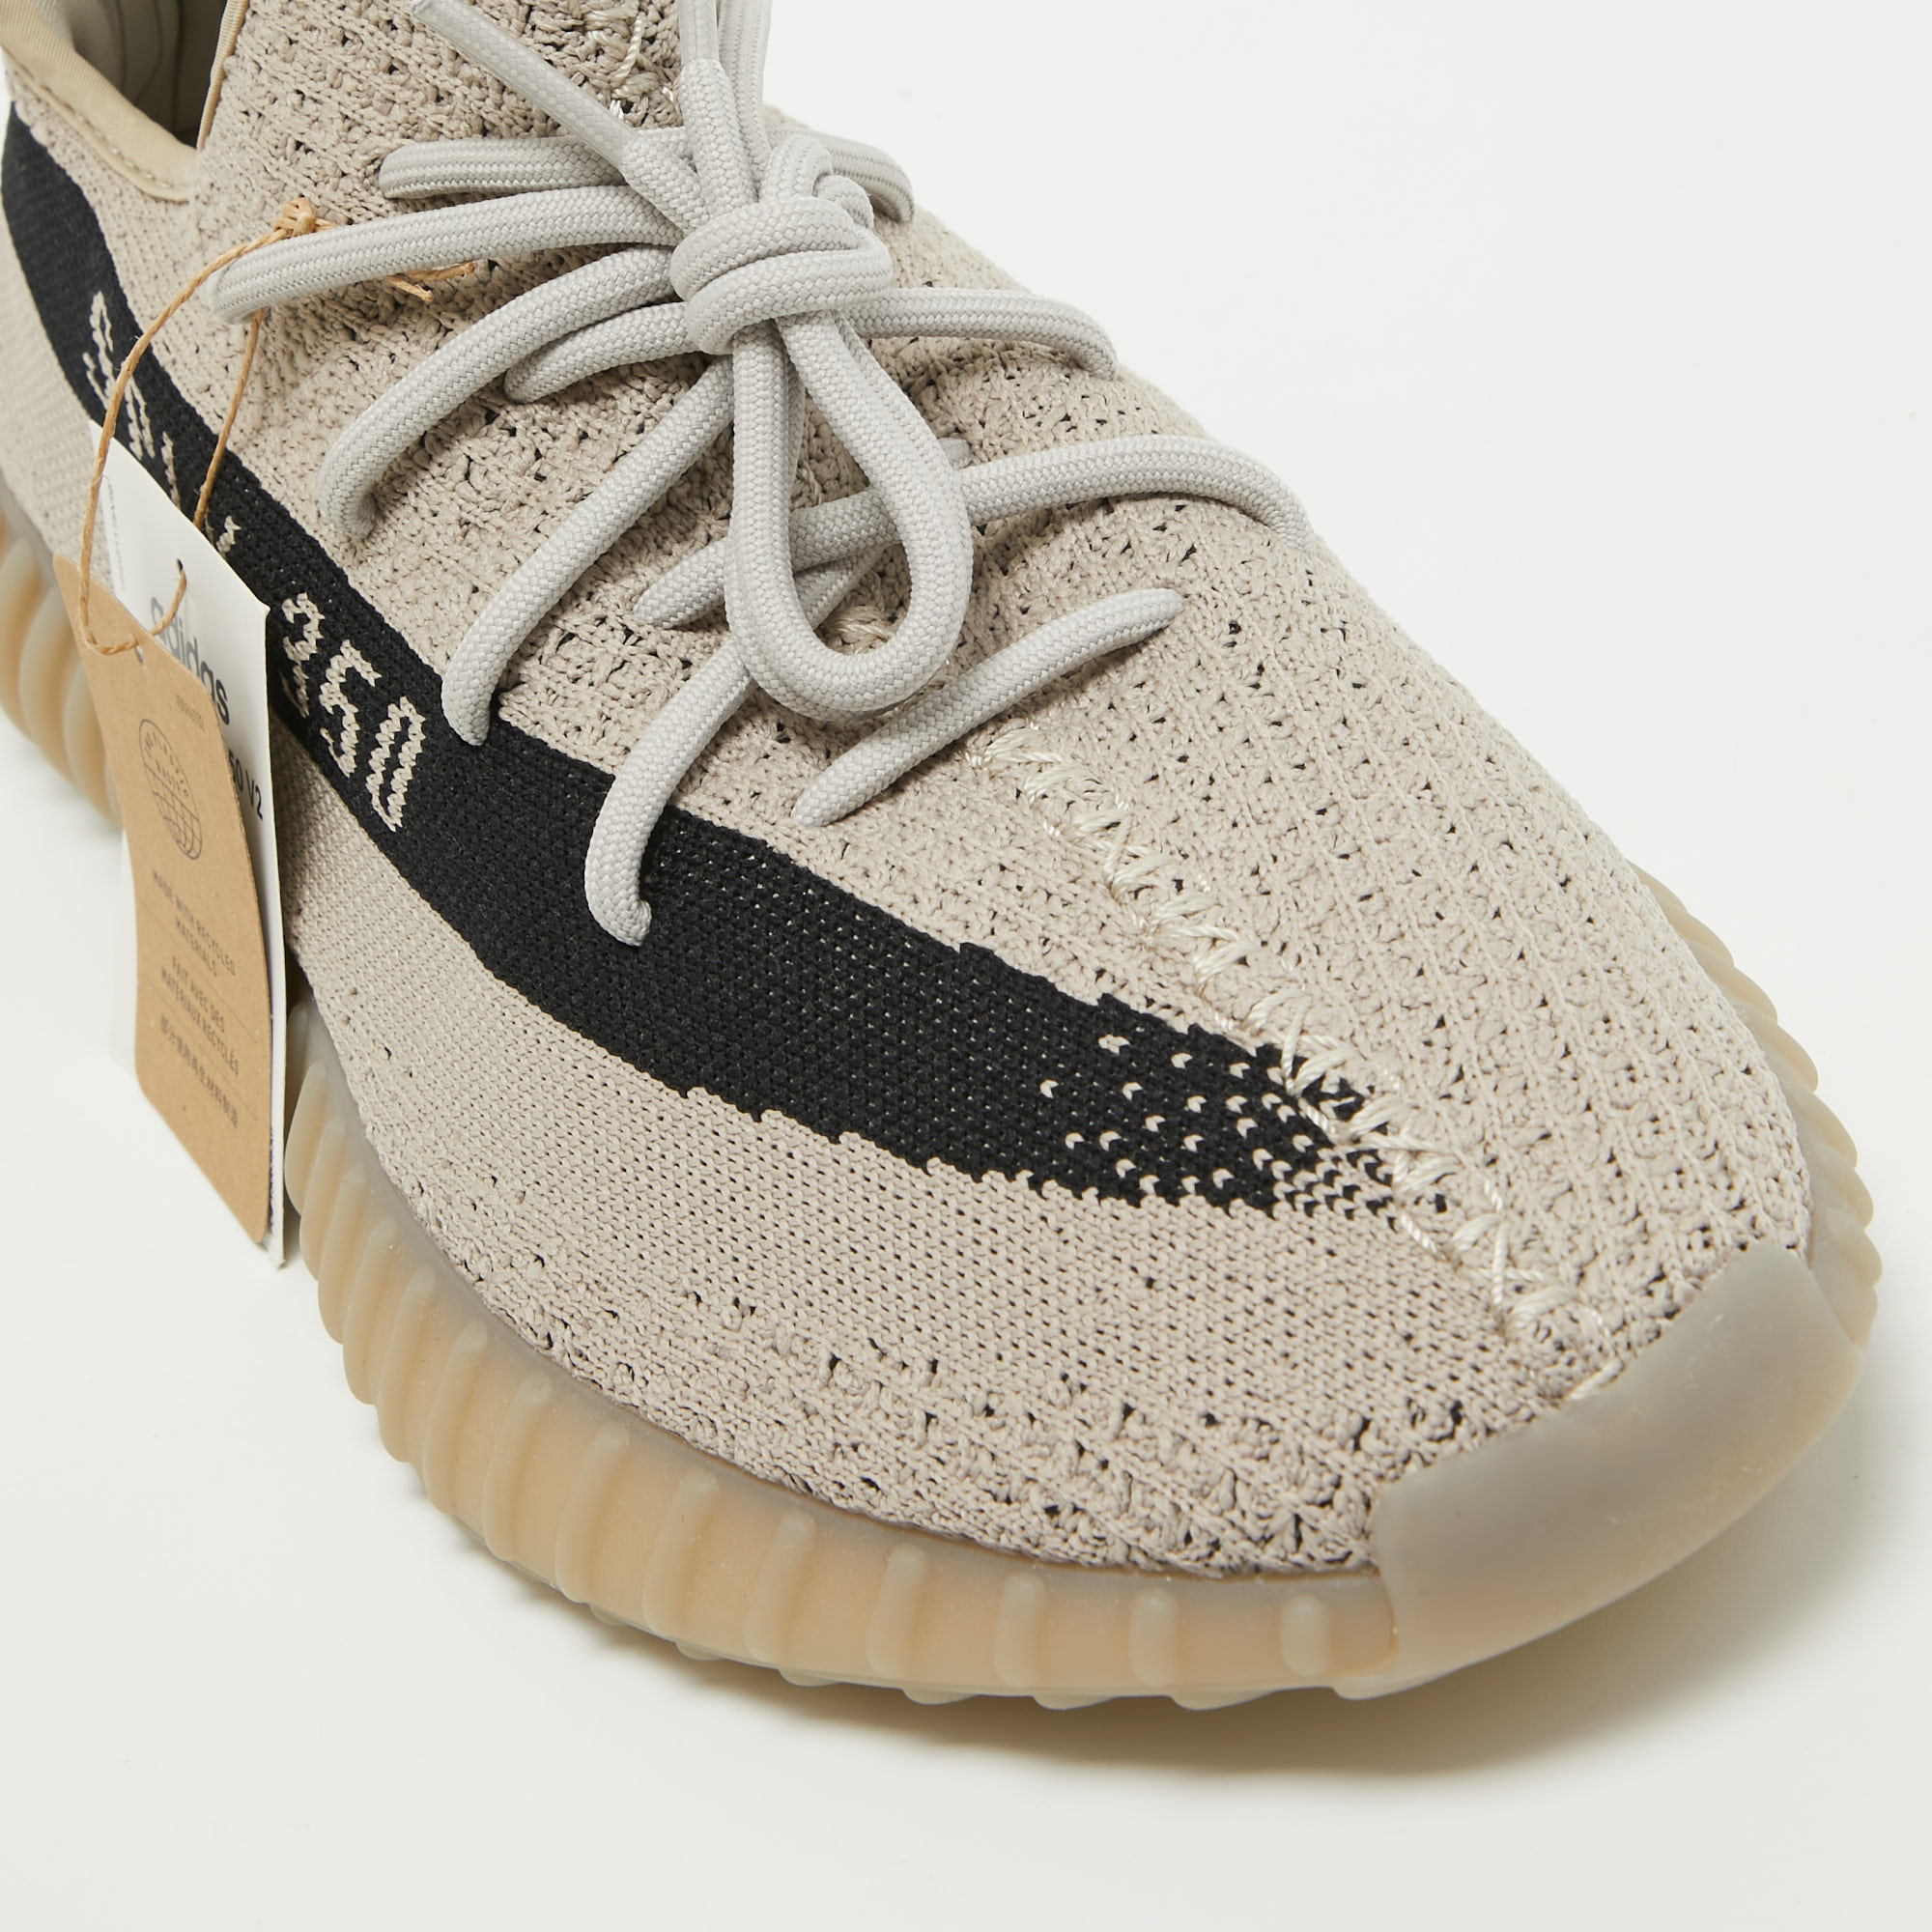 Yeezy X Adidas Grey/Black Knit Fabric Boost 350 V2 Slate Sneakers Size 47 1/3